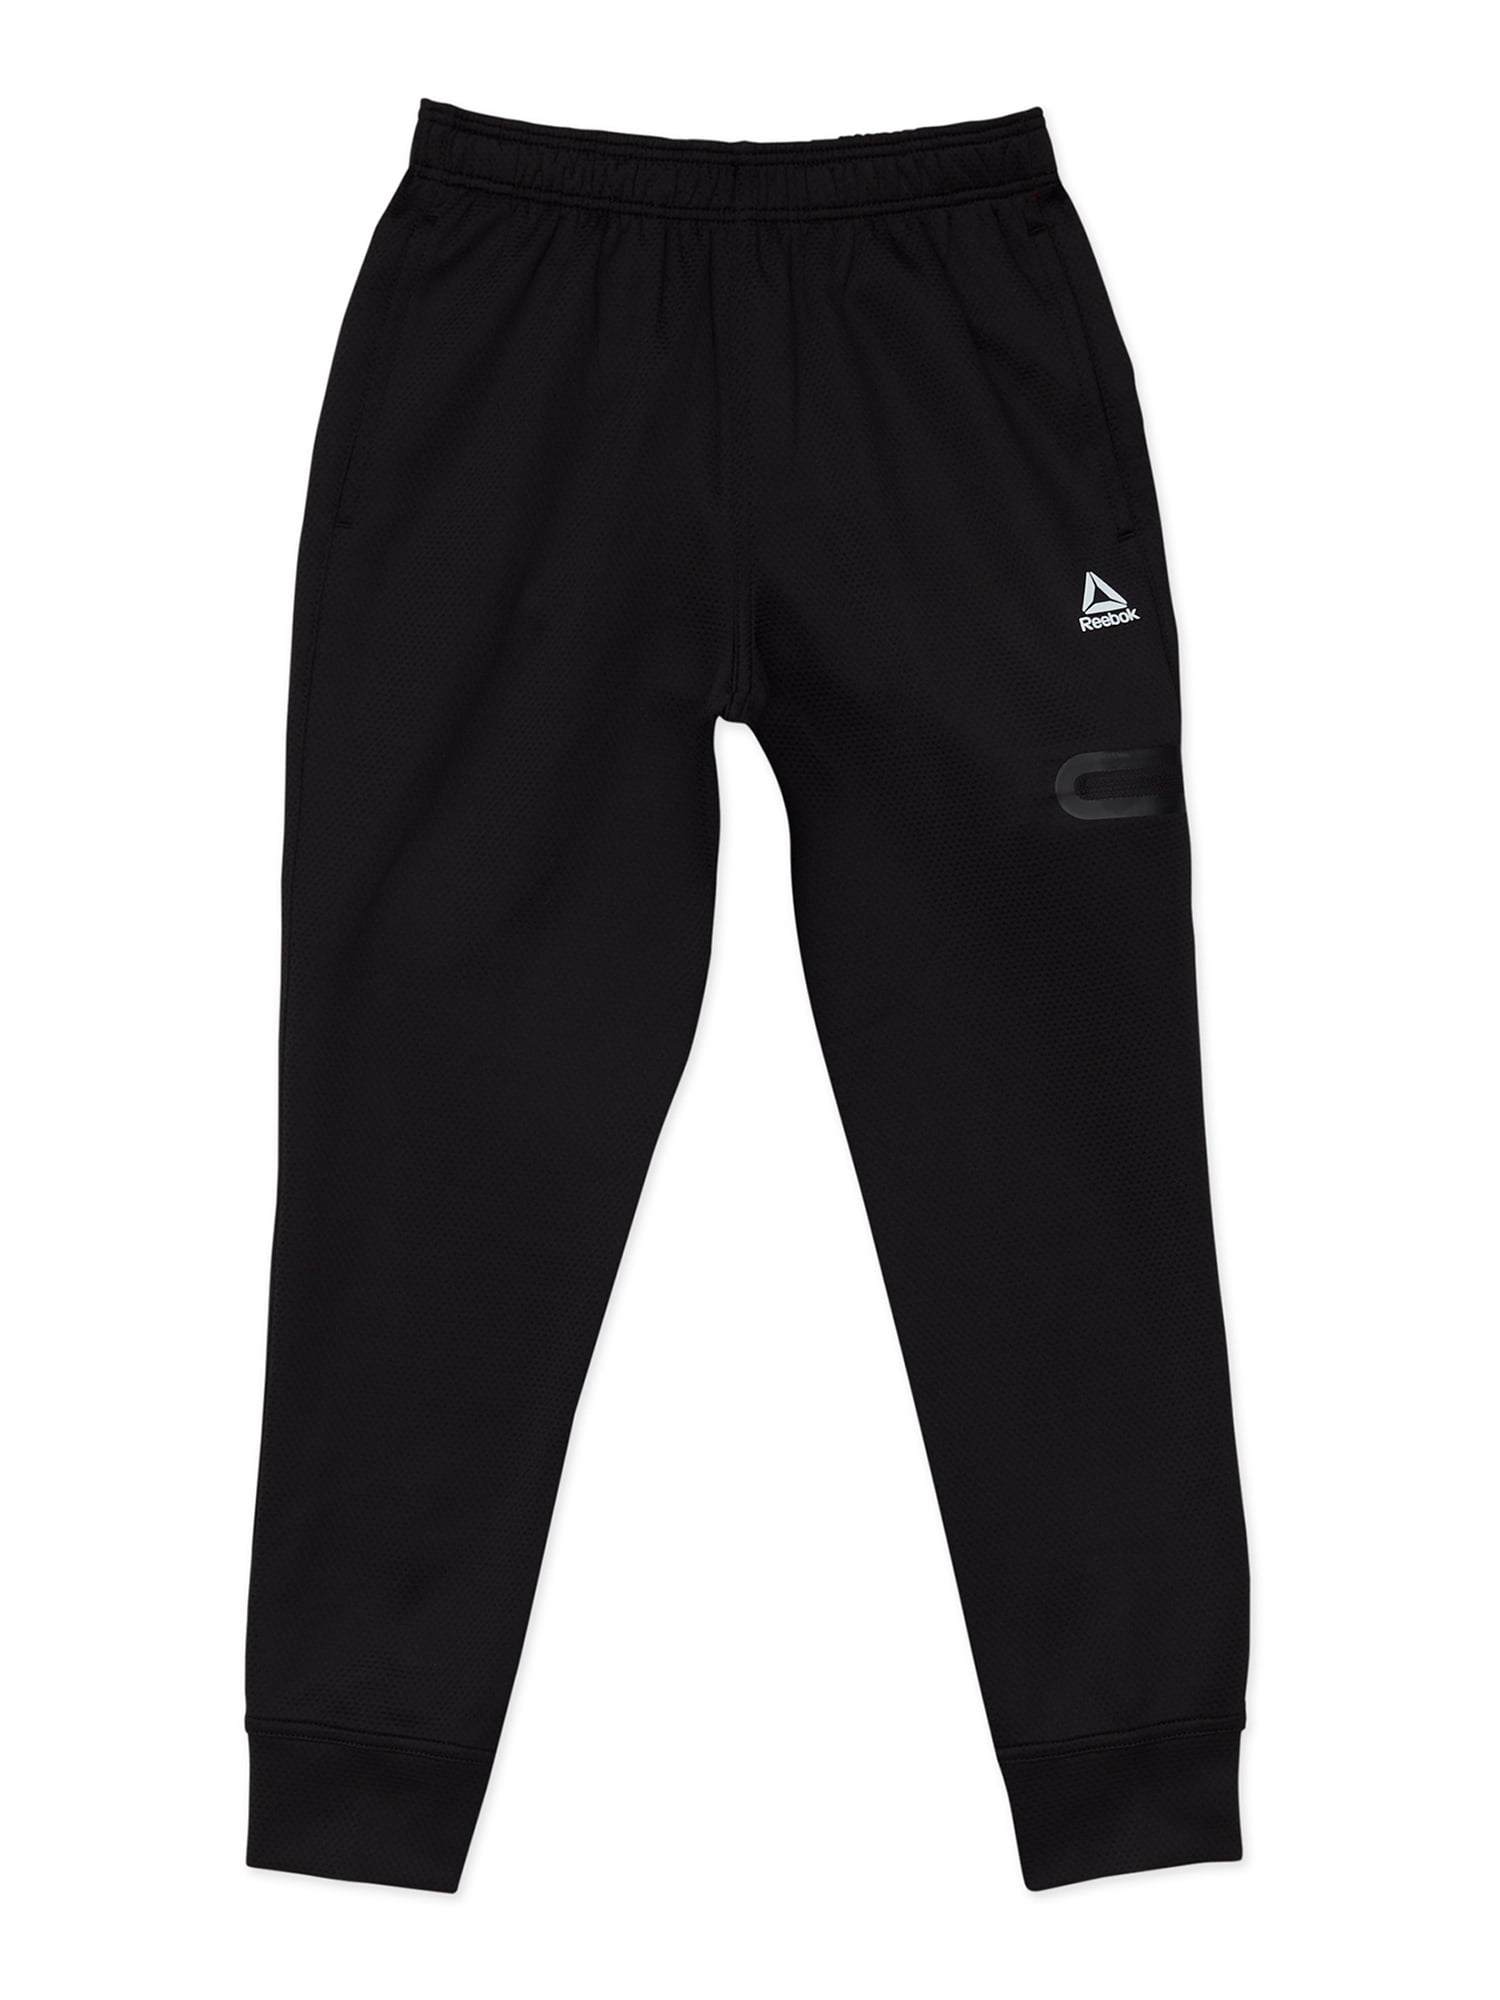 Reebok Boys Athletic Cross Training Pants, Sizes 4-18